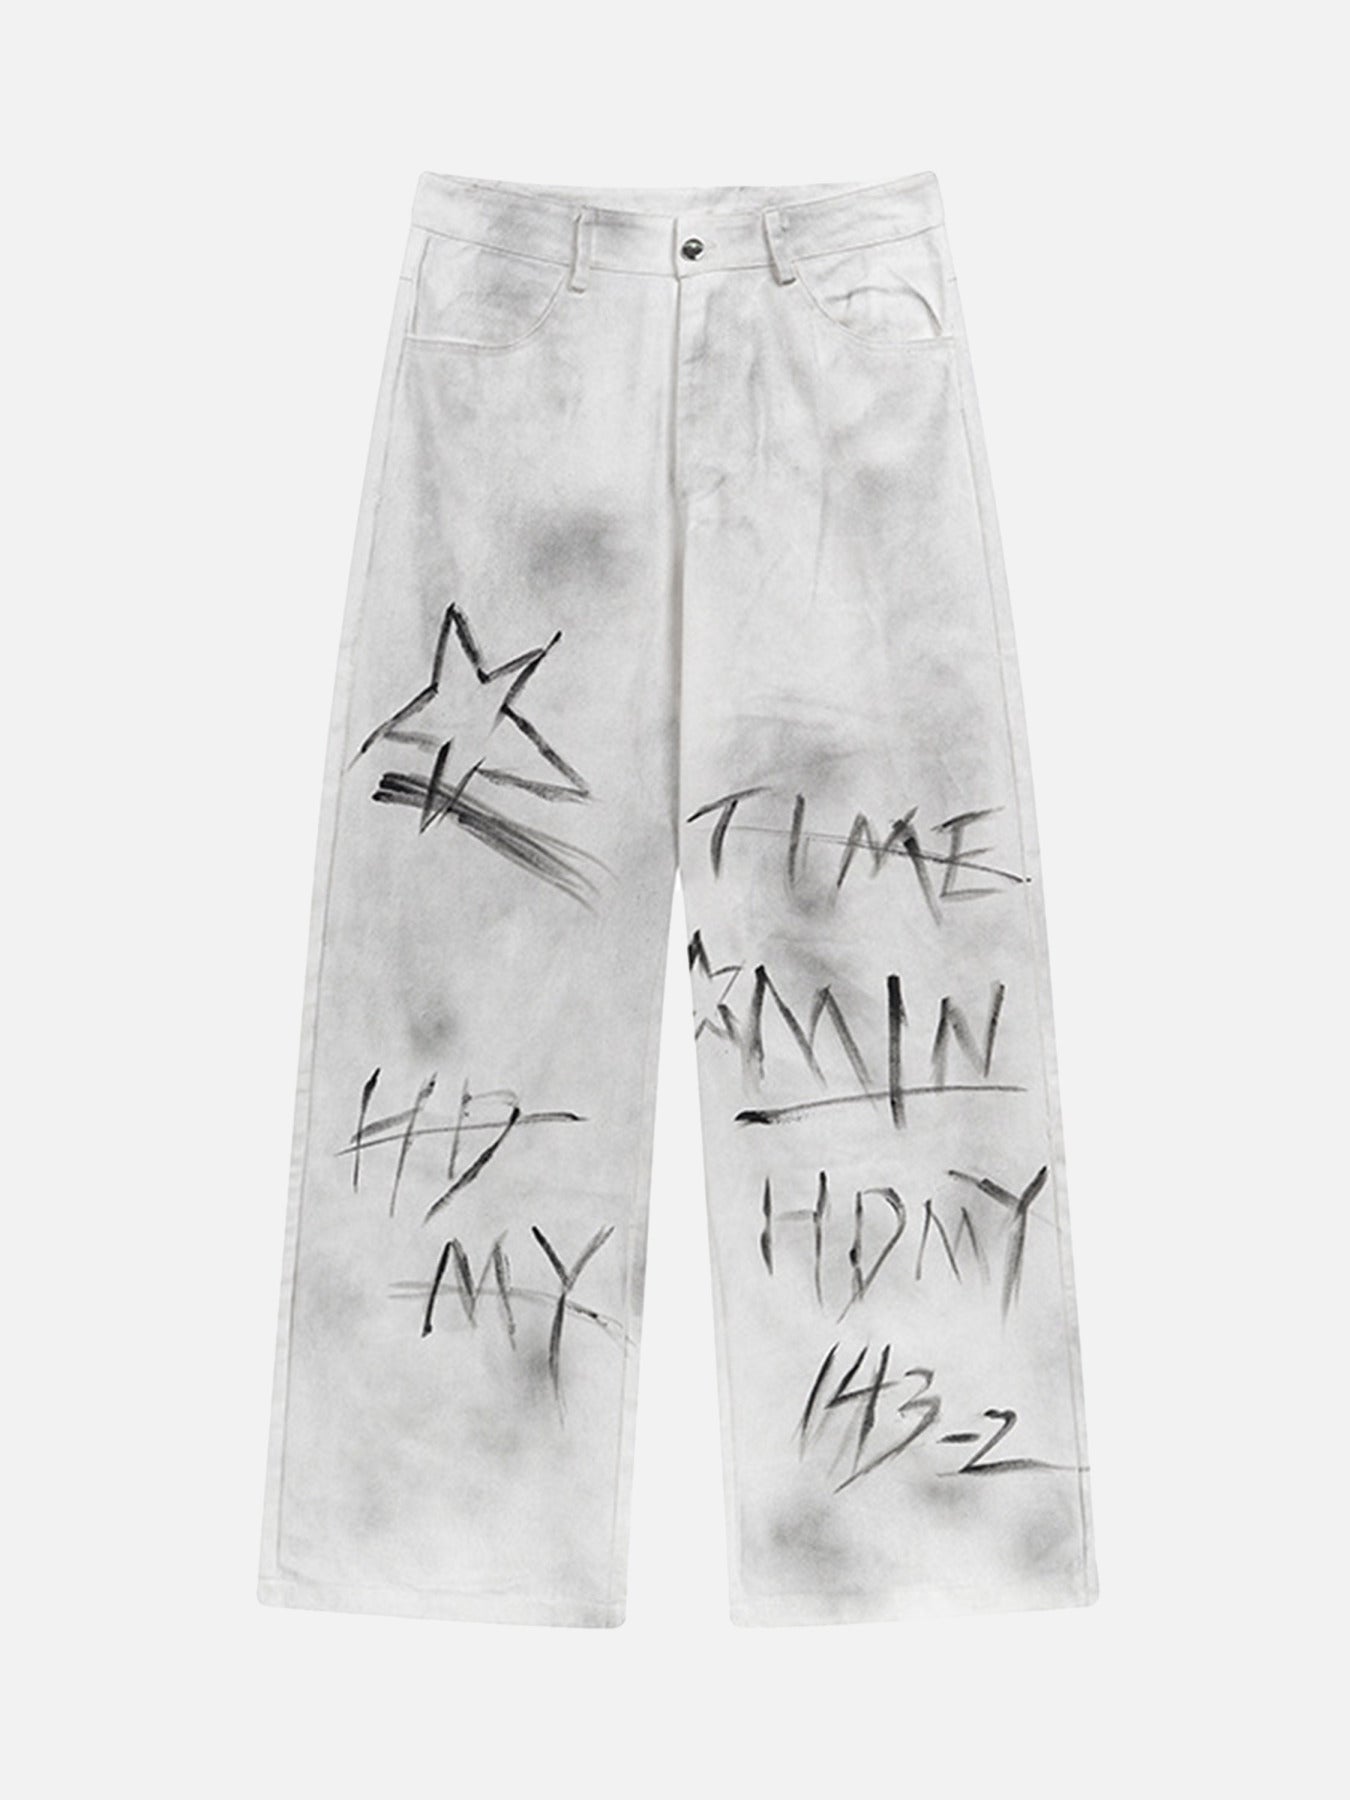 Thesupermade Graffiti Letter White Jeans